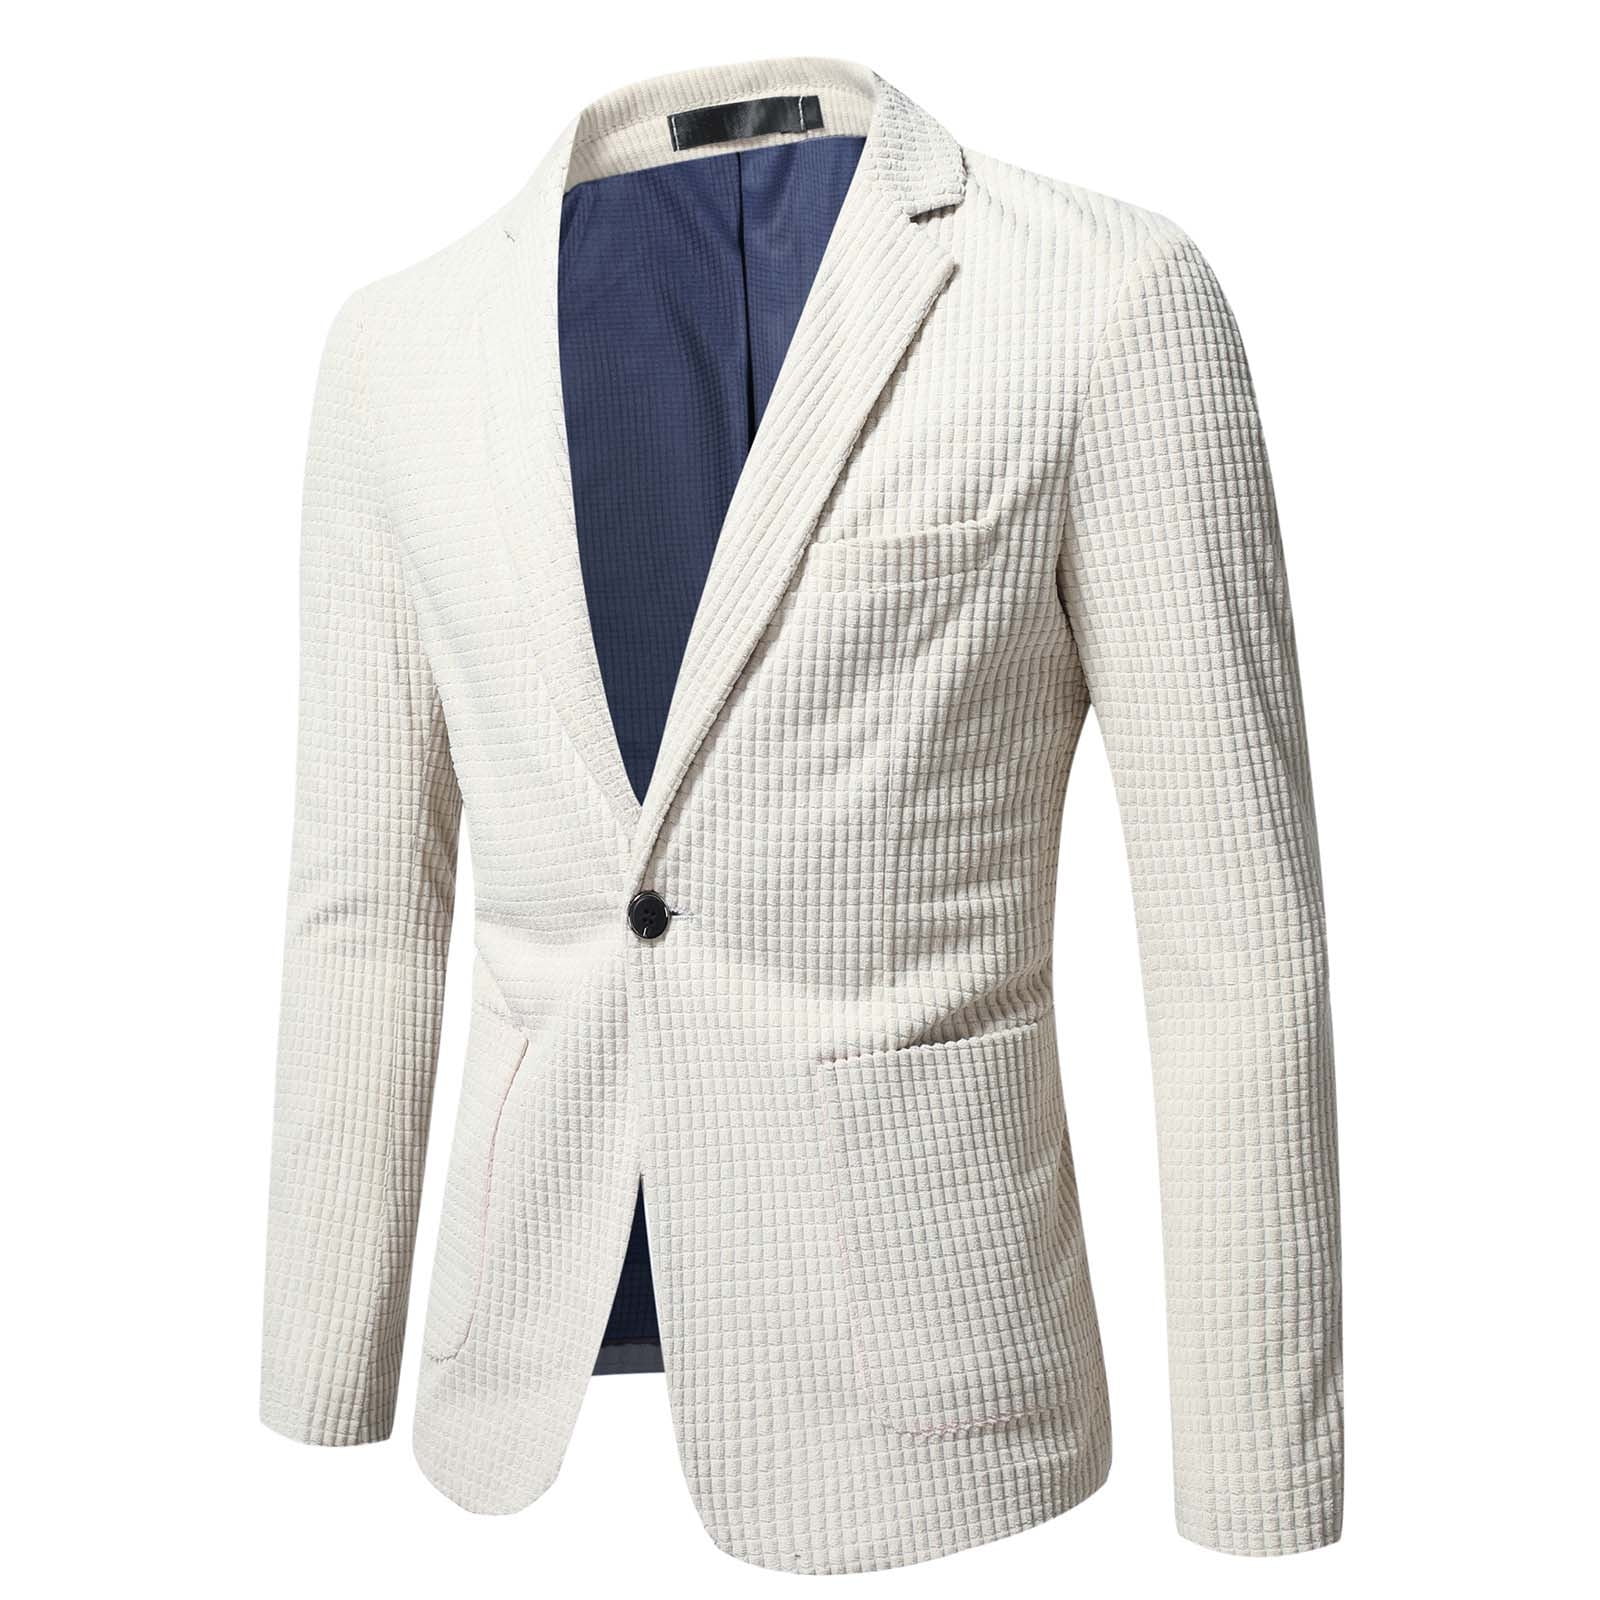 Zodggu Blazers Corduroy Jacket Suit for Men Business Pocket Office